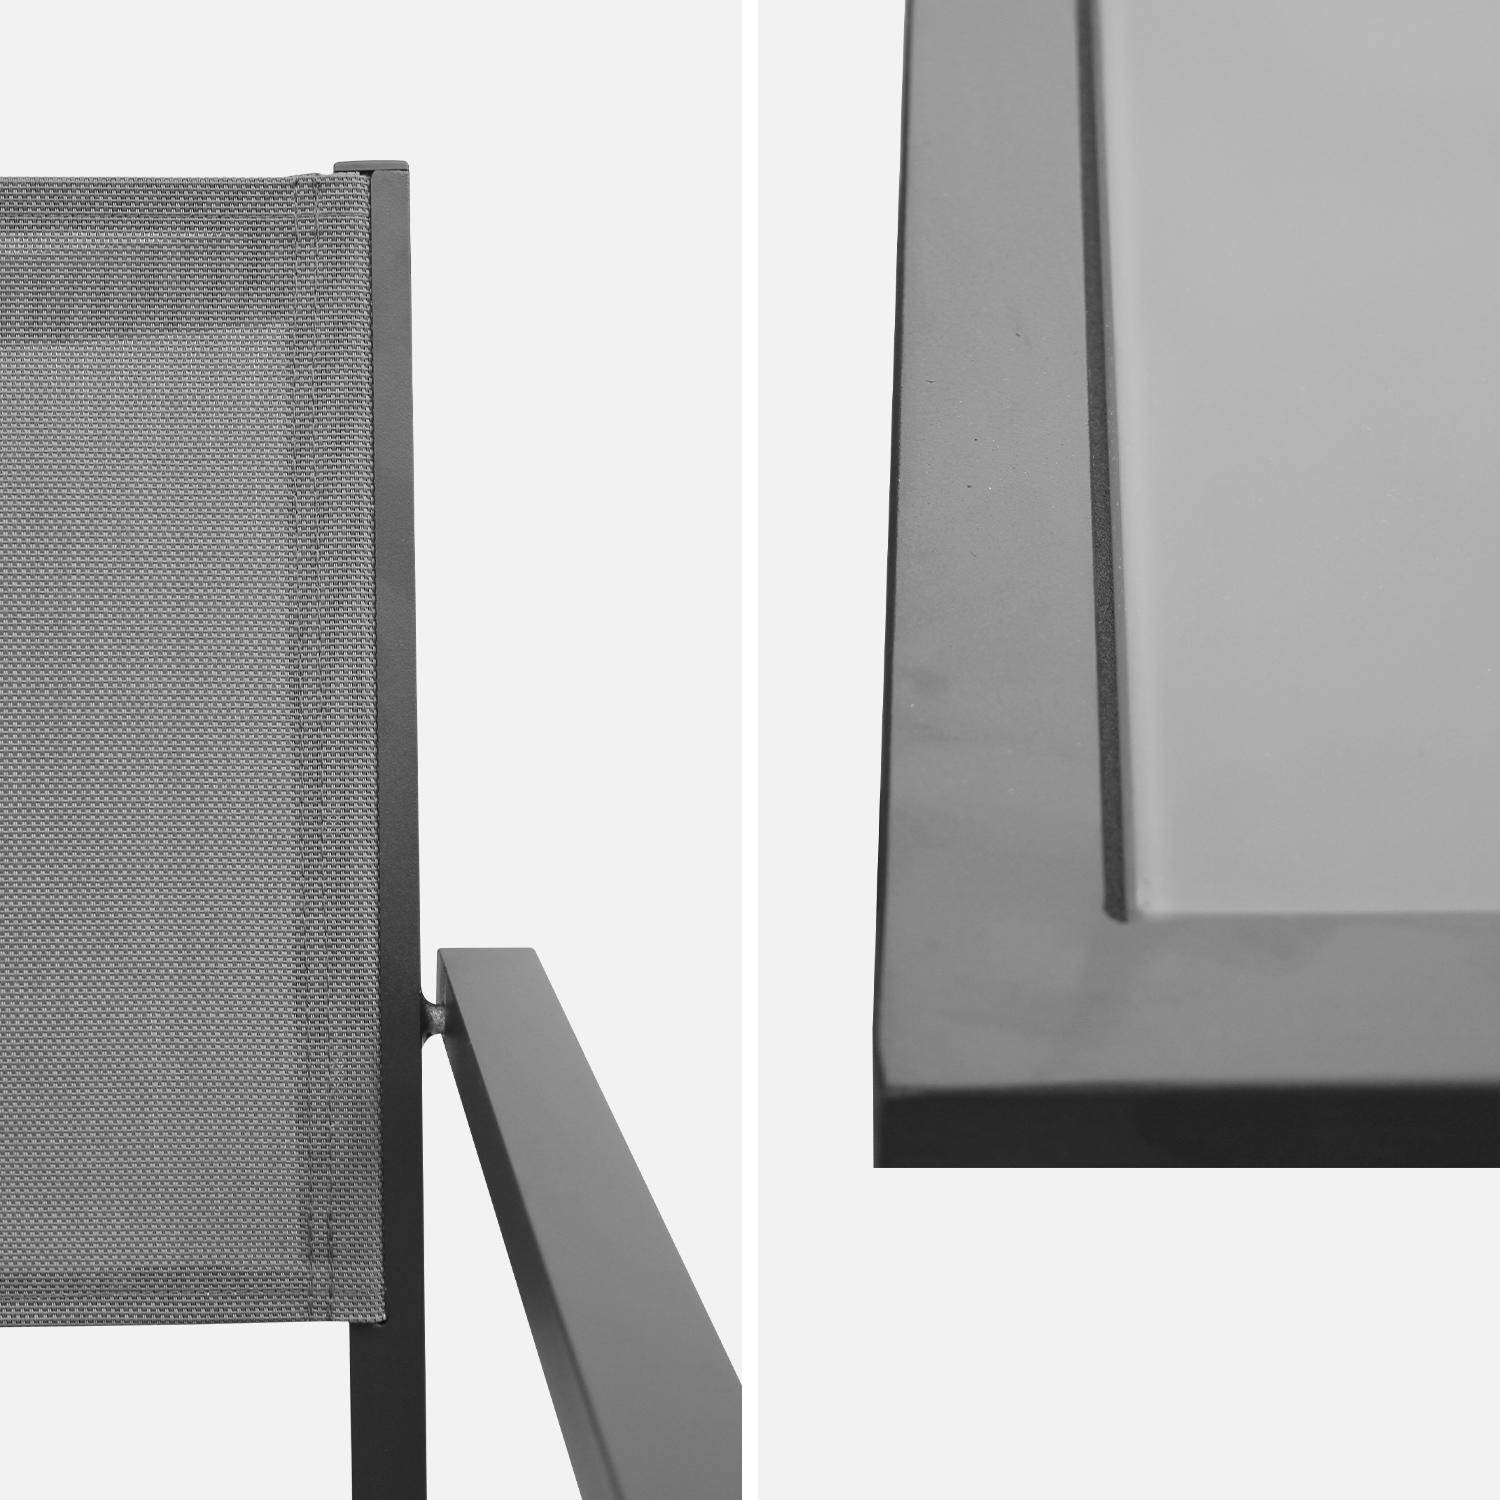 Gartengarnitur aus Aluminium und Textilene - Capua 180 cm - Anthrazit, grau - 8 Plätze - 1 großer rechteckiger Tisch, 8 stapelbare Sessel Photo7